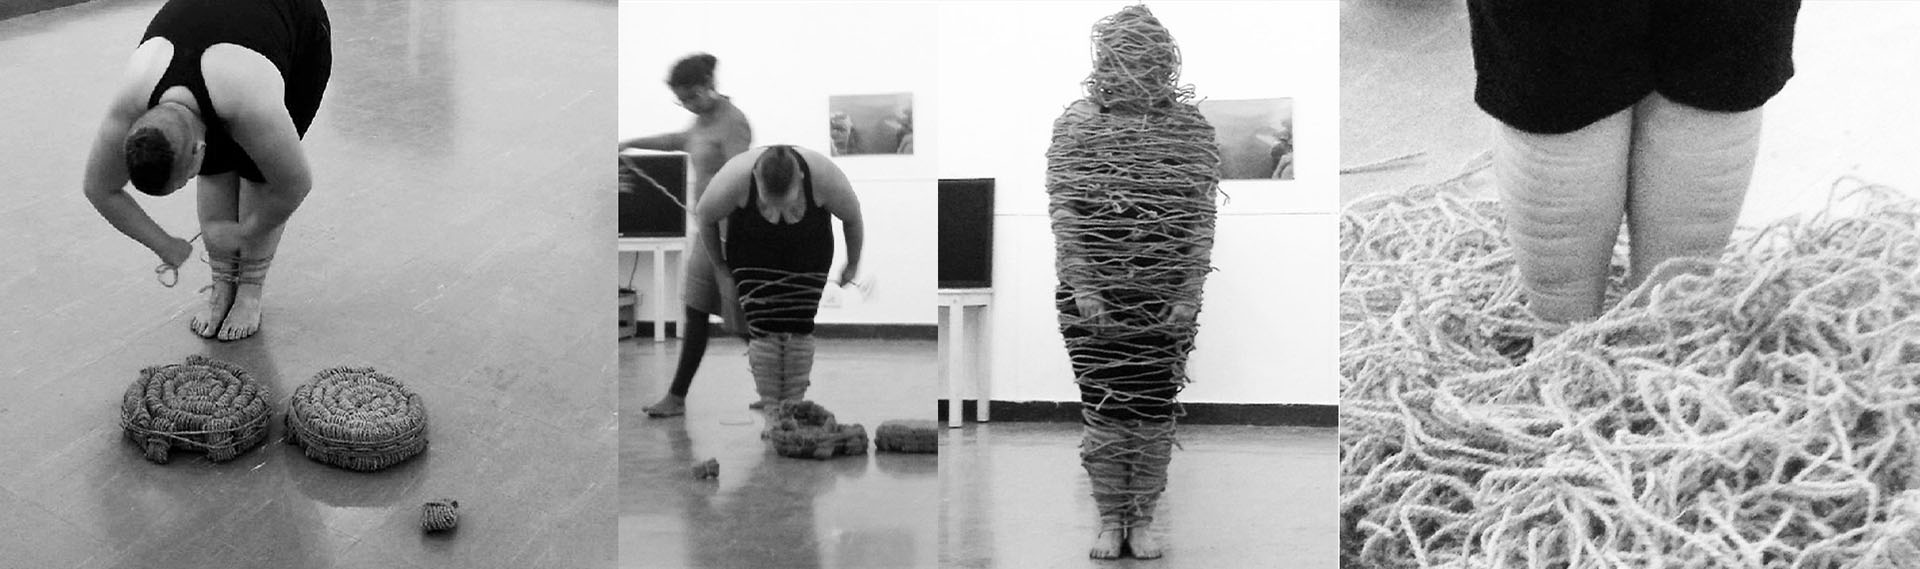 Cocoon performance by artist Katarina Rasic